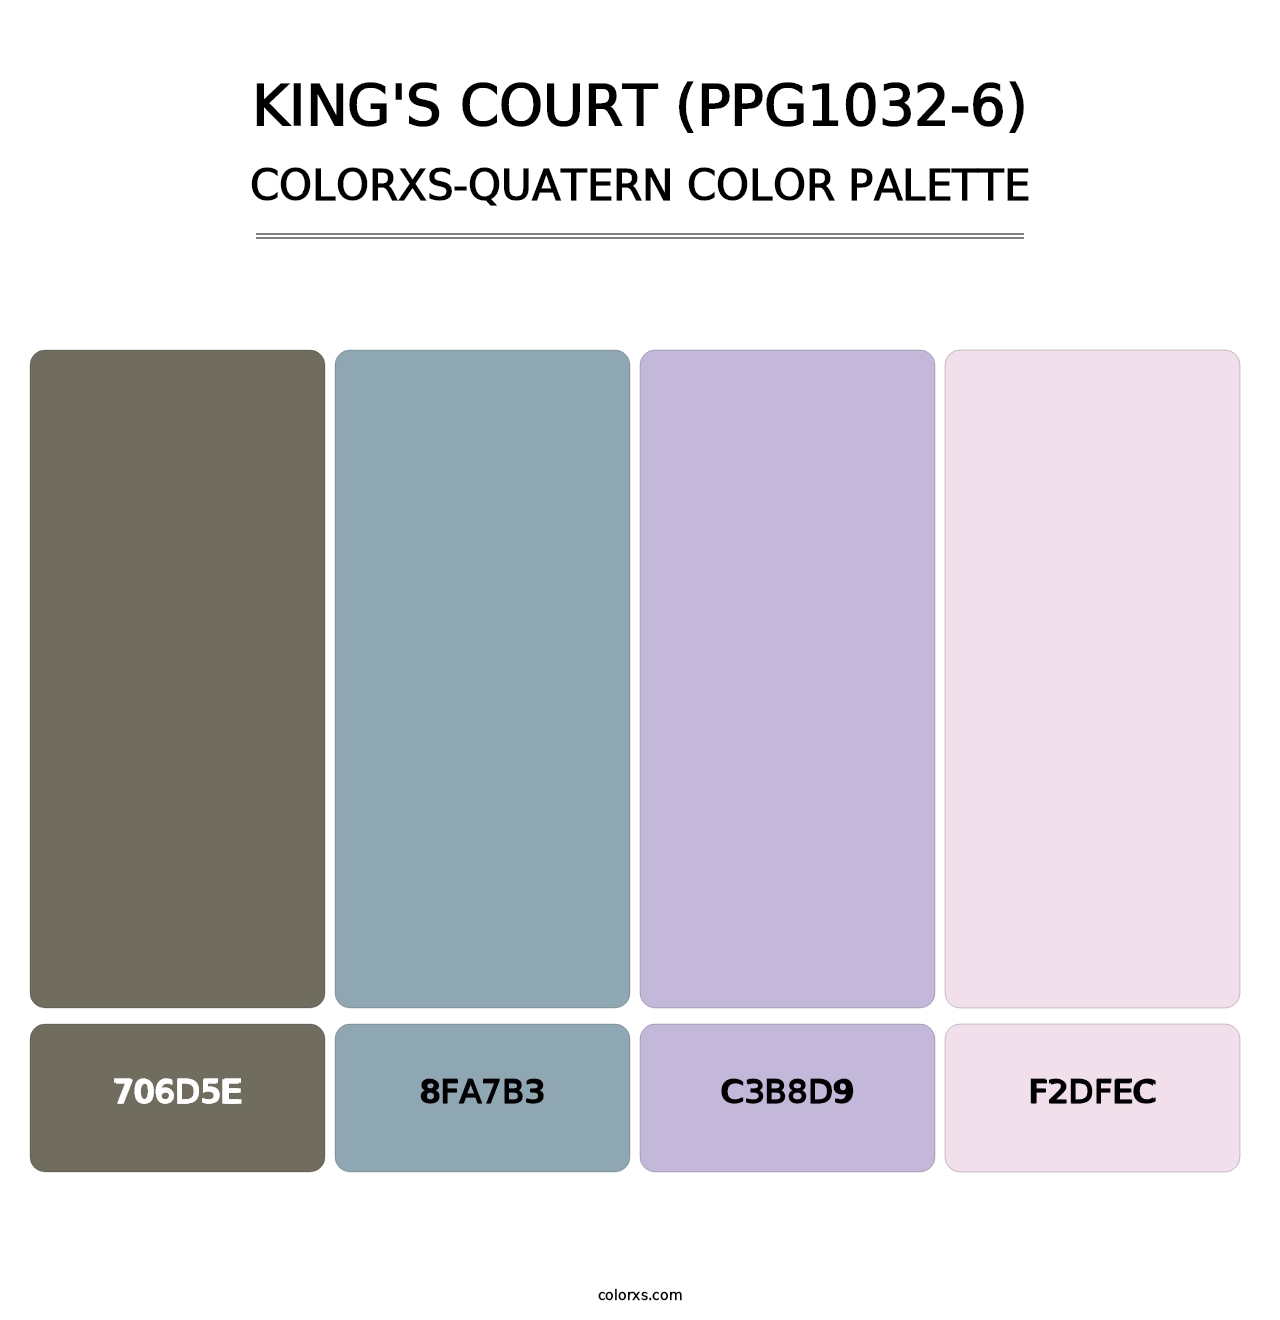 King's Court (PPG1032-6) - Colorxs Quatern Palette